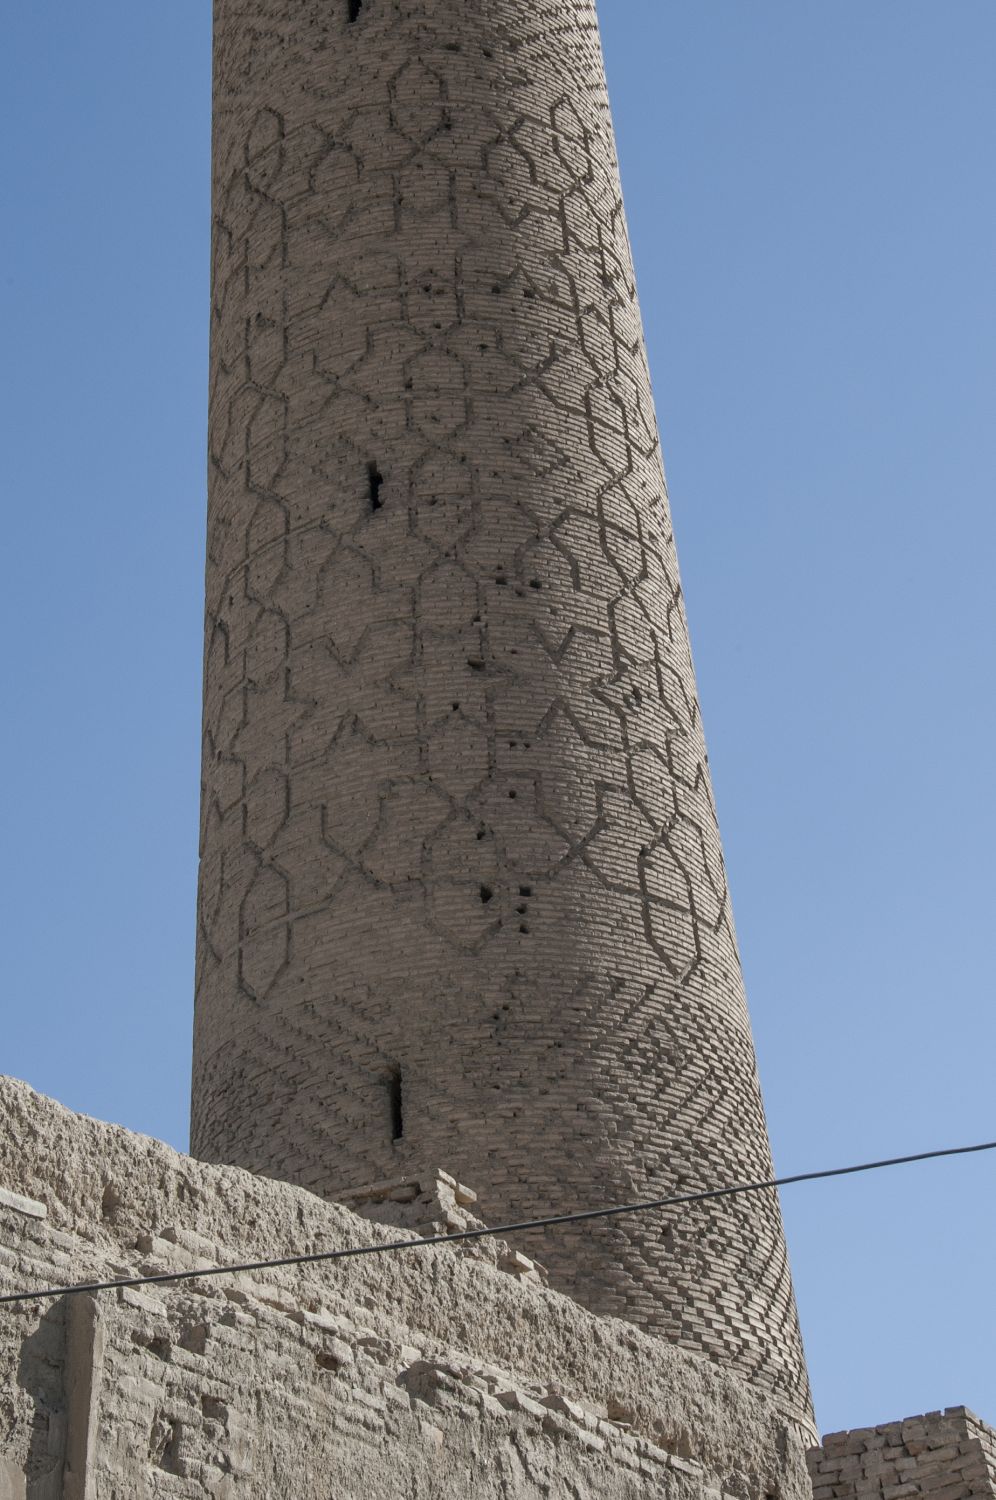 Minaret, view of bottom portion.